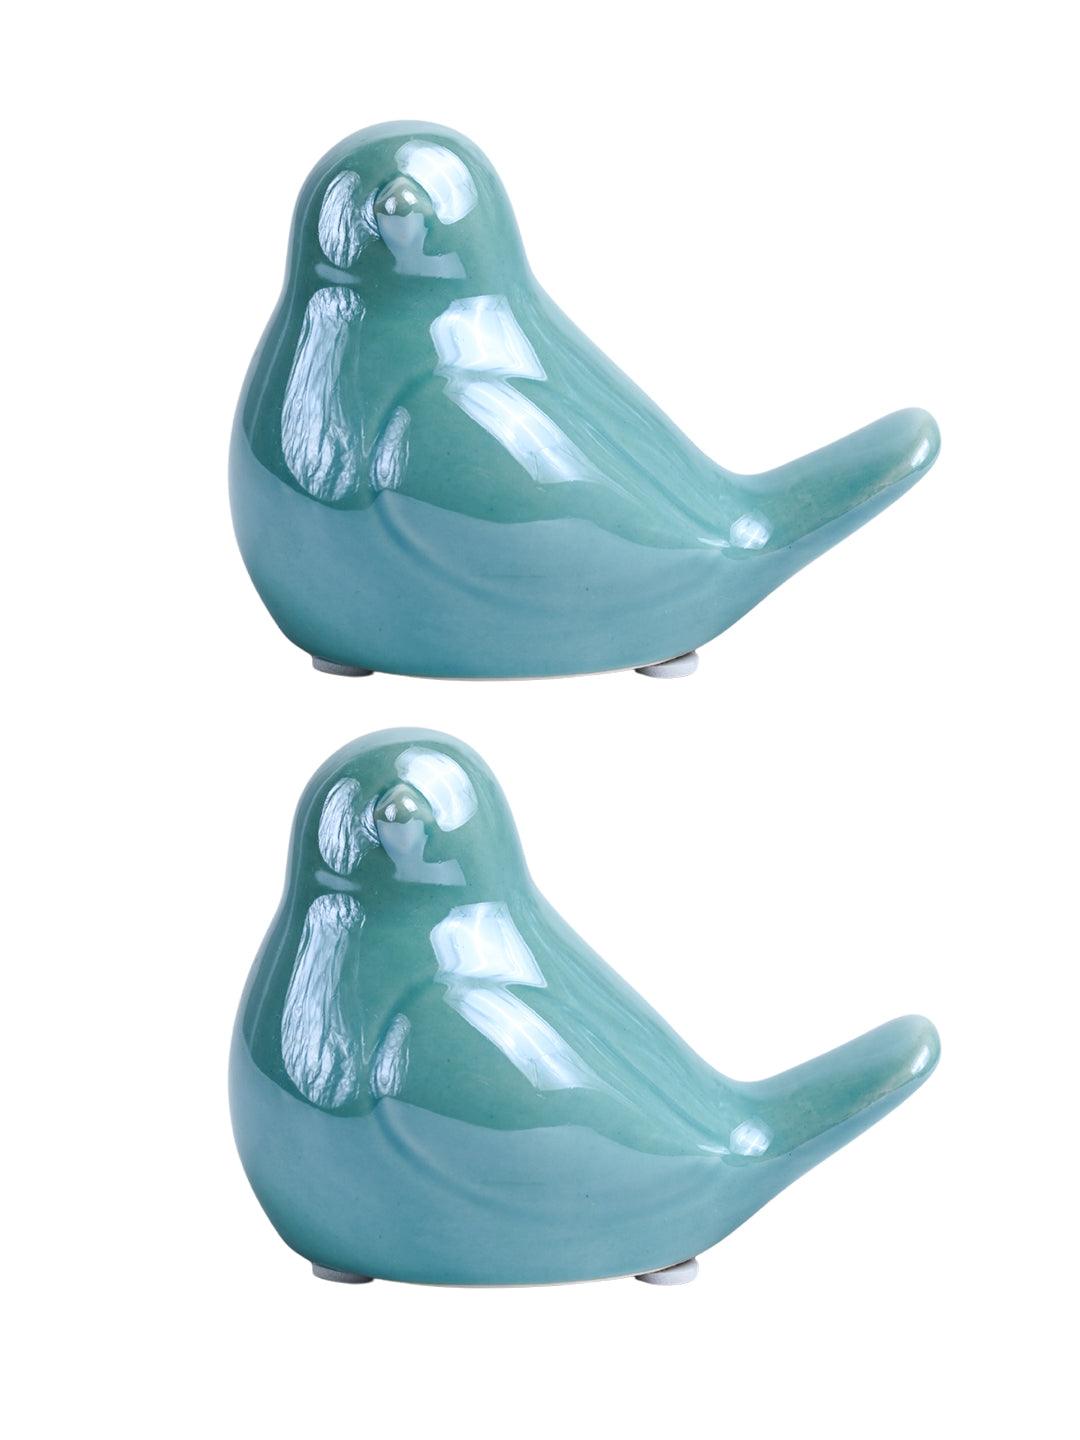 VON CASA Ceramic Decorative Bird - Skyblue, Set Of 2 - MARKET99